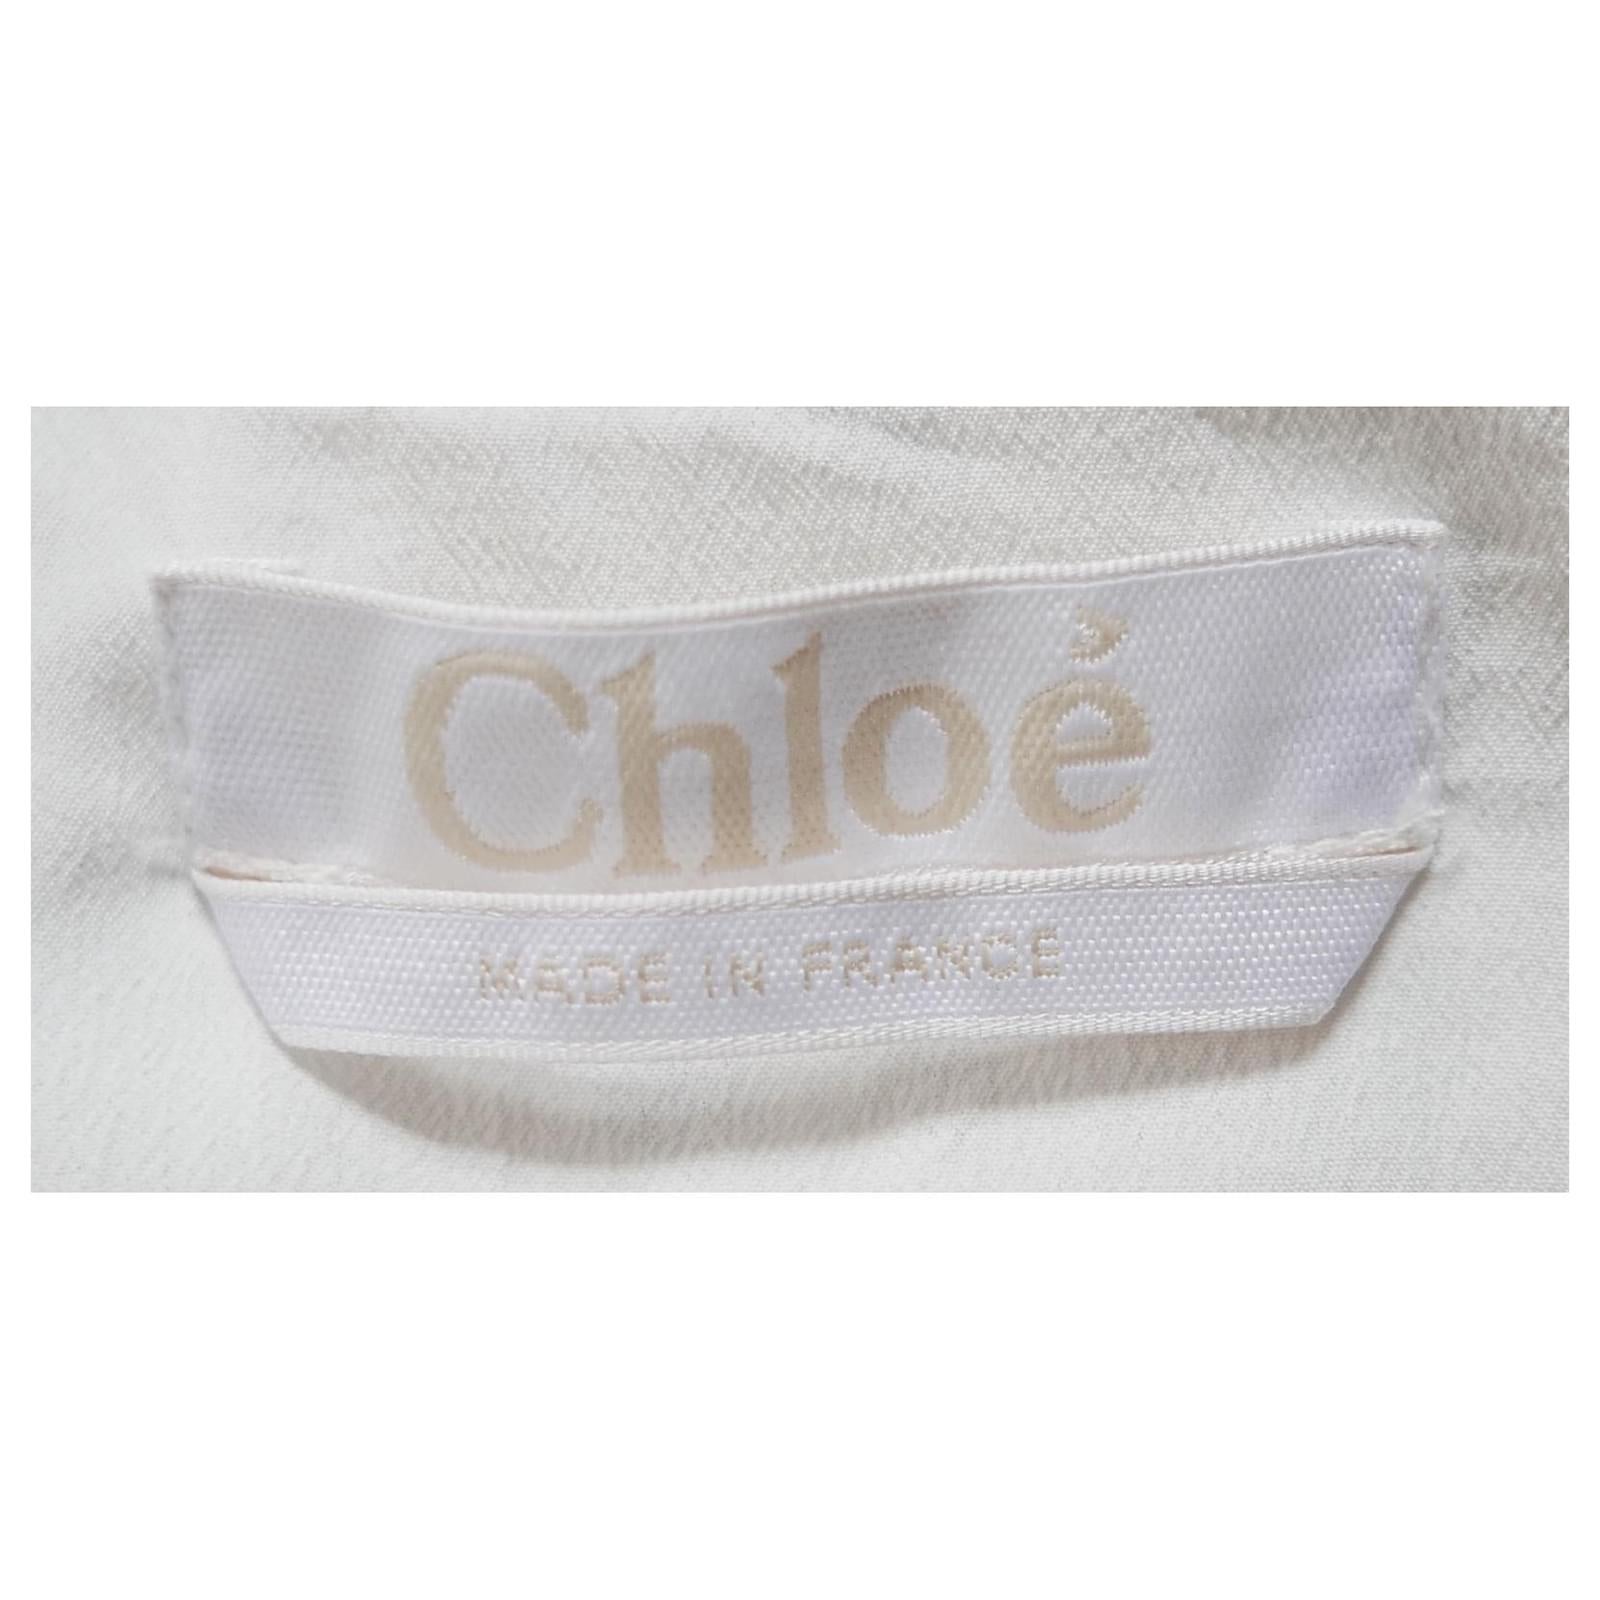 Chloe SS16 Tassel Trim Linen & Broderie Anglais Top For Sale 4